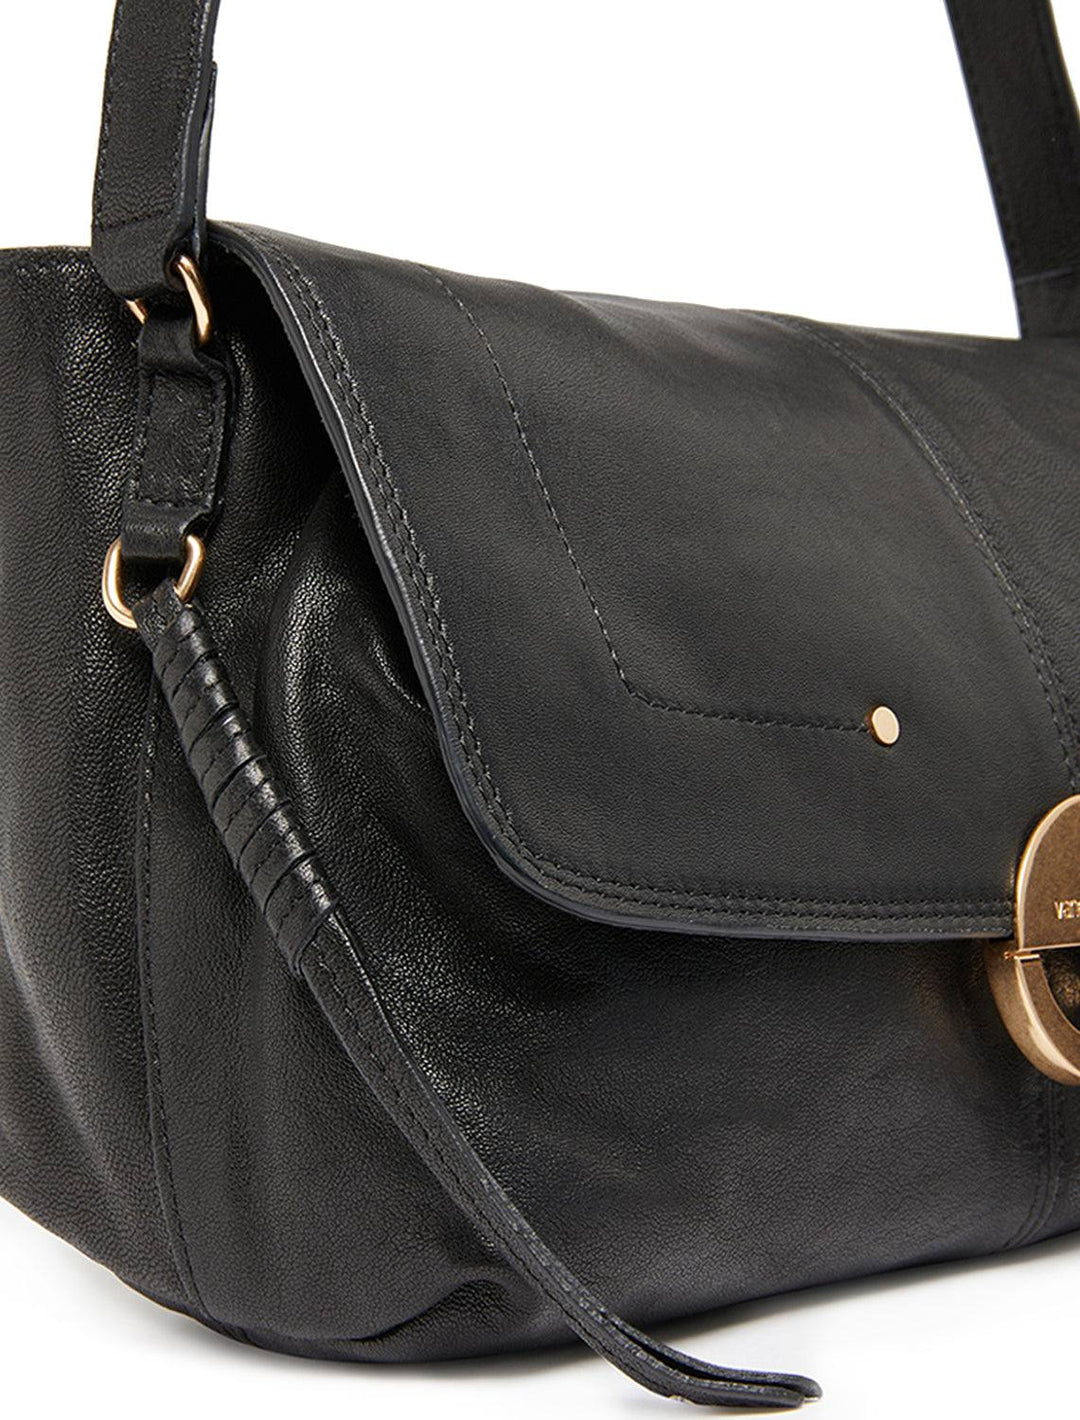 Close-up view of Vanessa Bruno's crossbody gm handbag in noir.